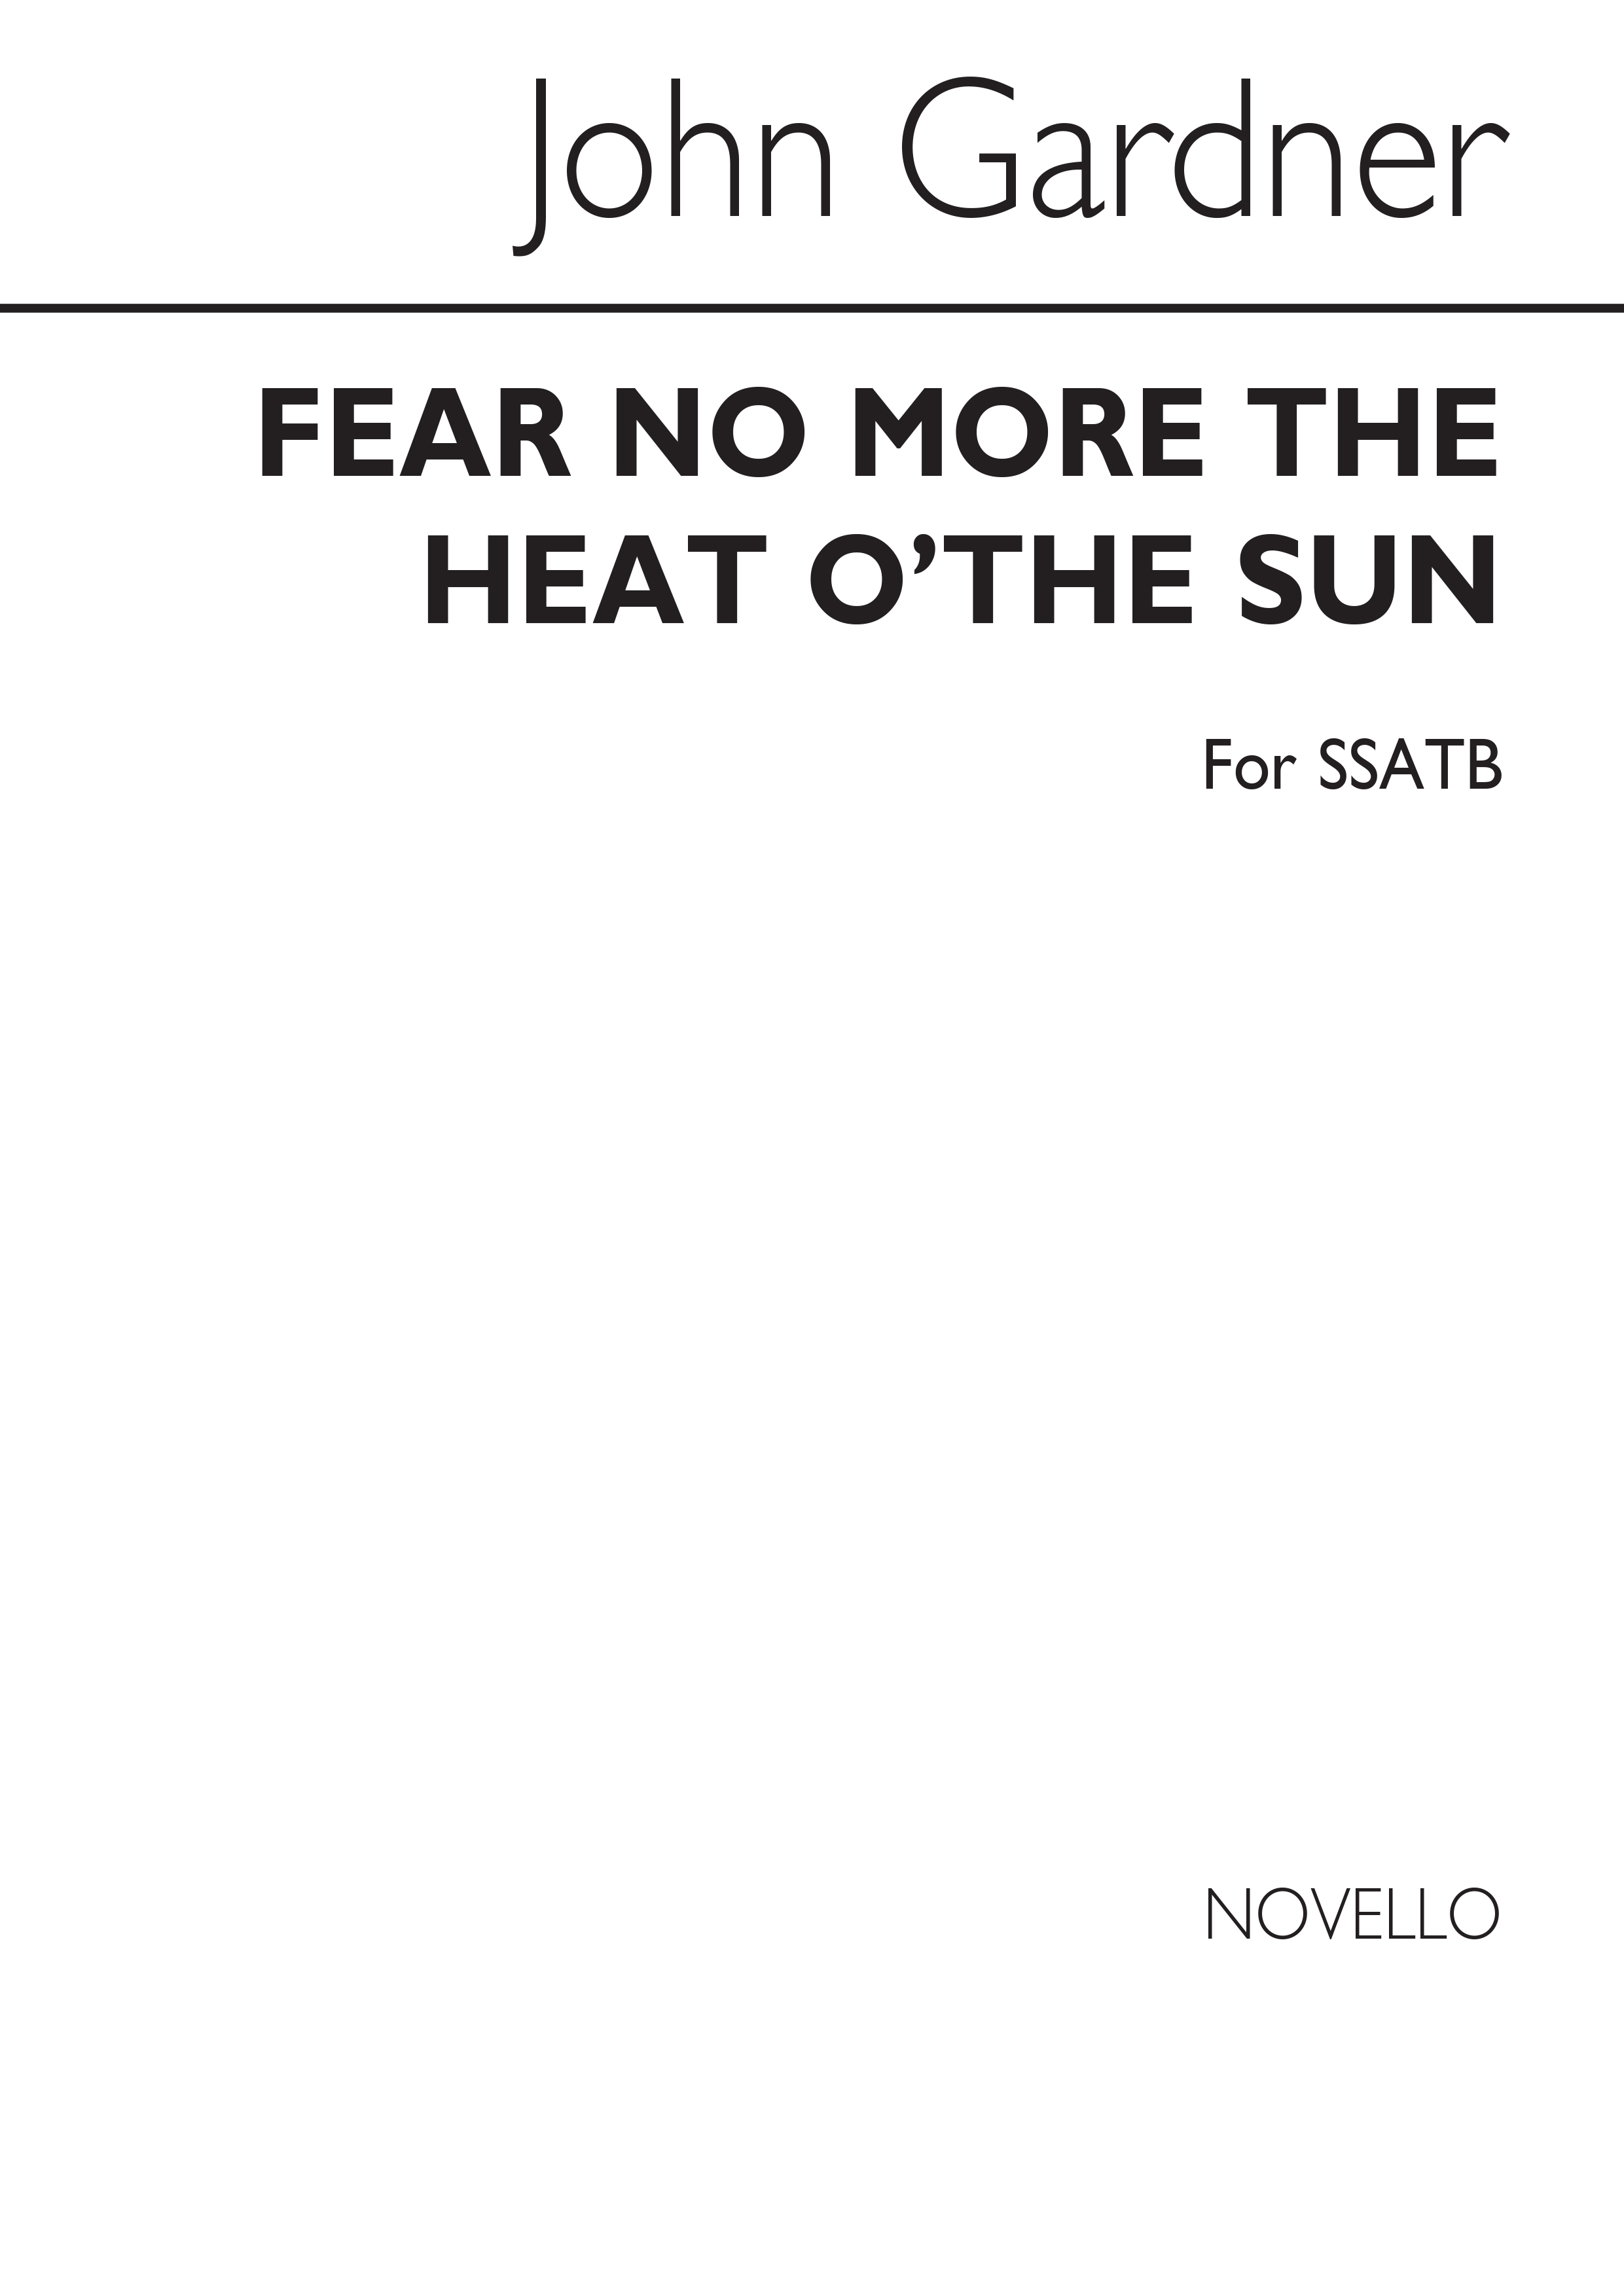 John Gardner: Fear No More The Heat O' The Sun (Cymbeline) Op.71: SATB: Vocal